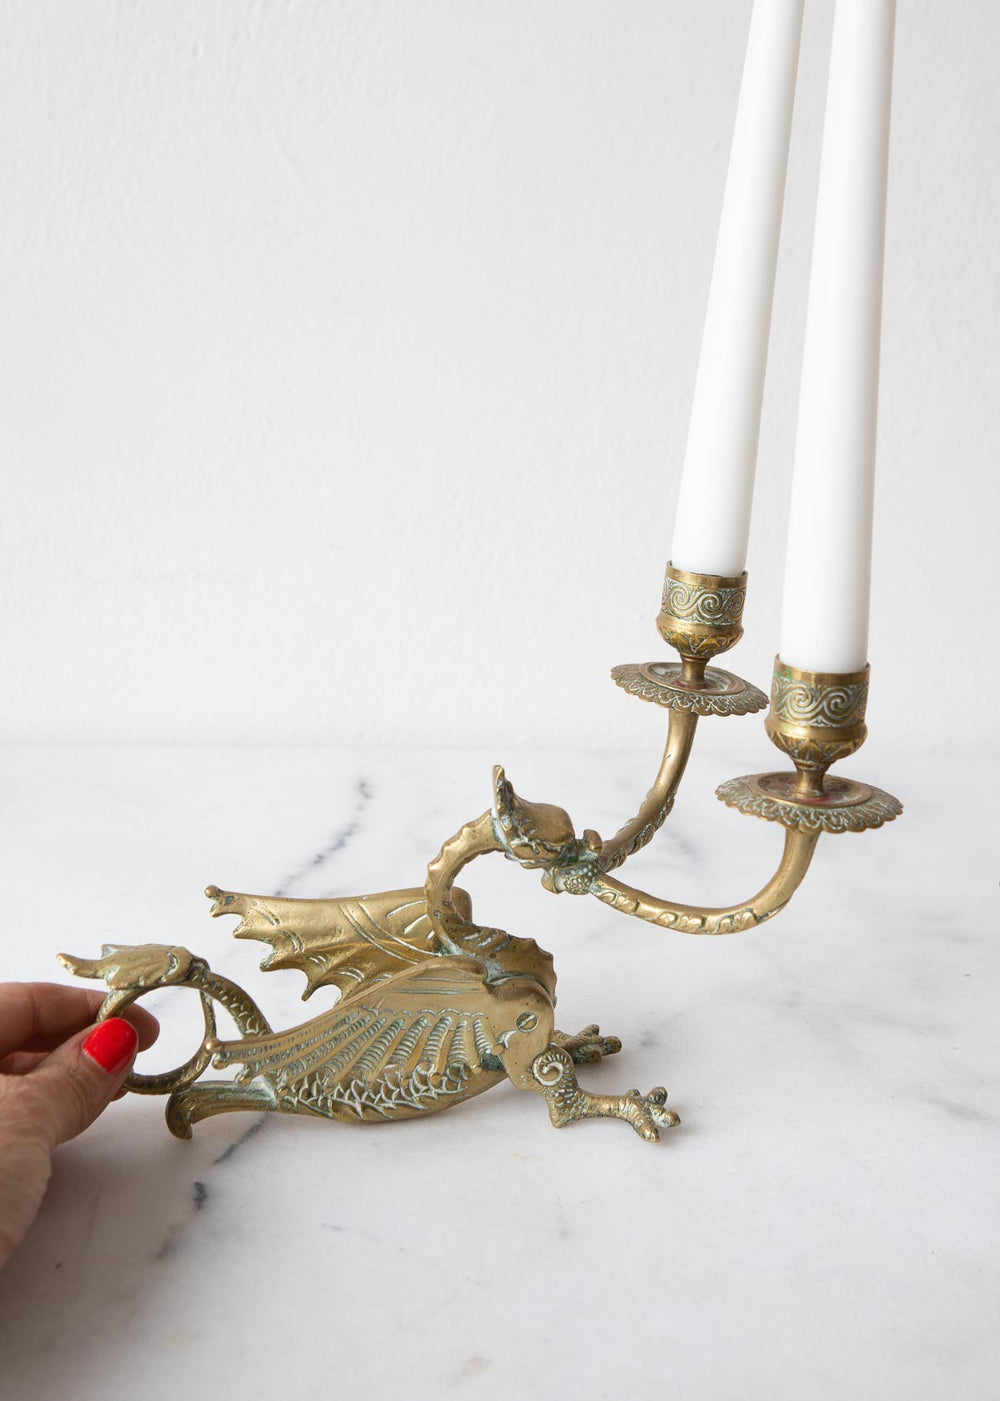 Antiguos candeleros quimeras o dragones. Francia aprox. 1900 antique French dragon candleholders